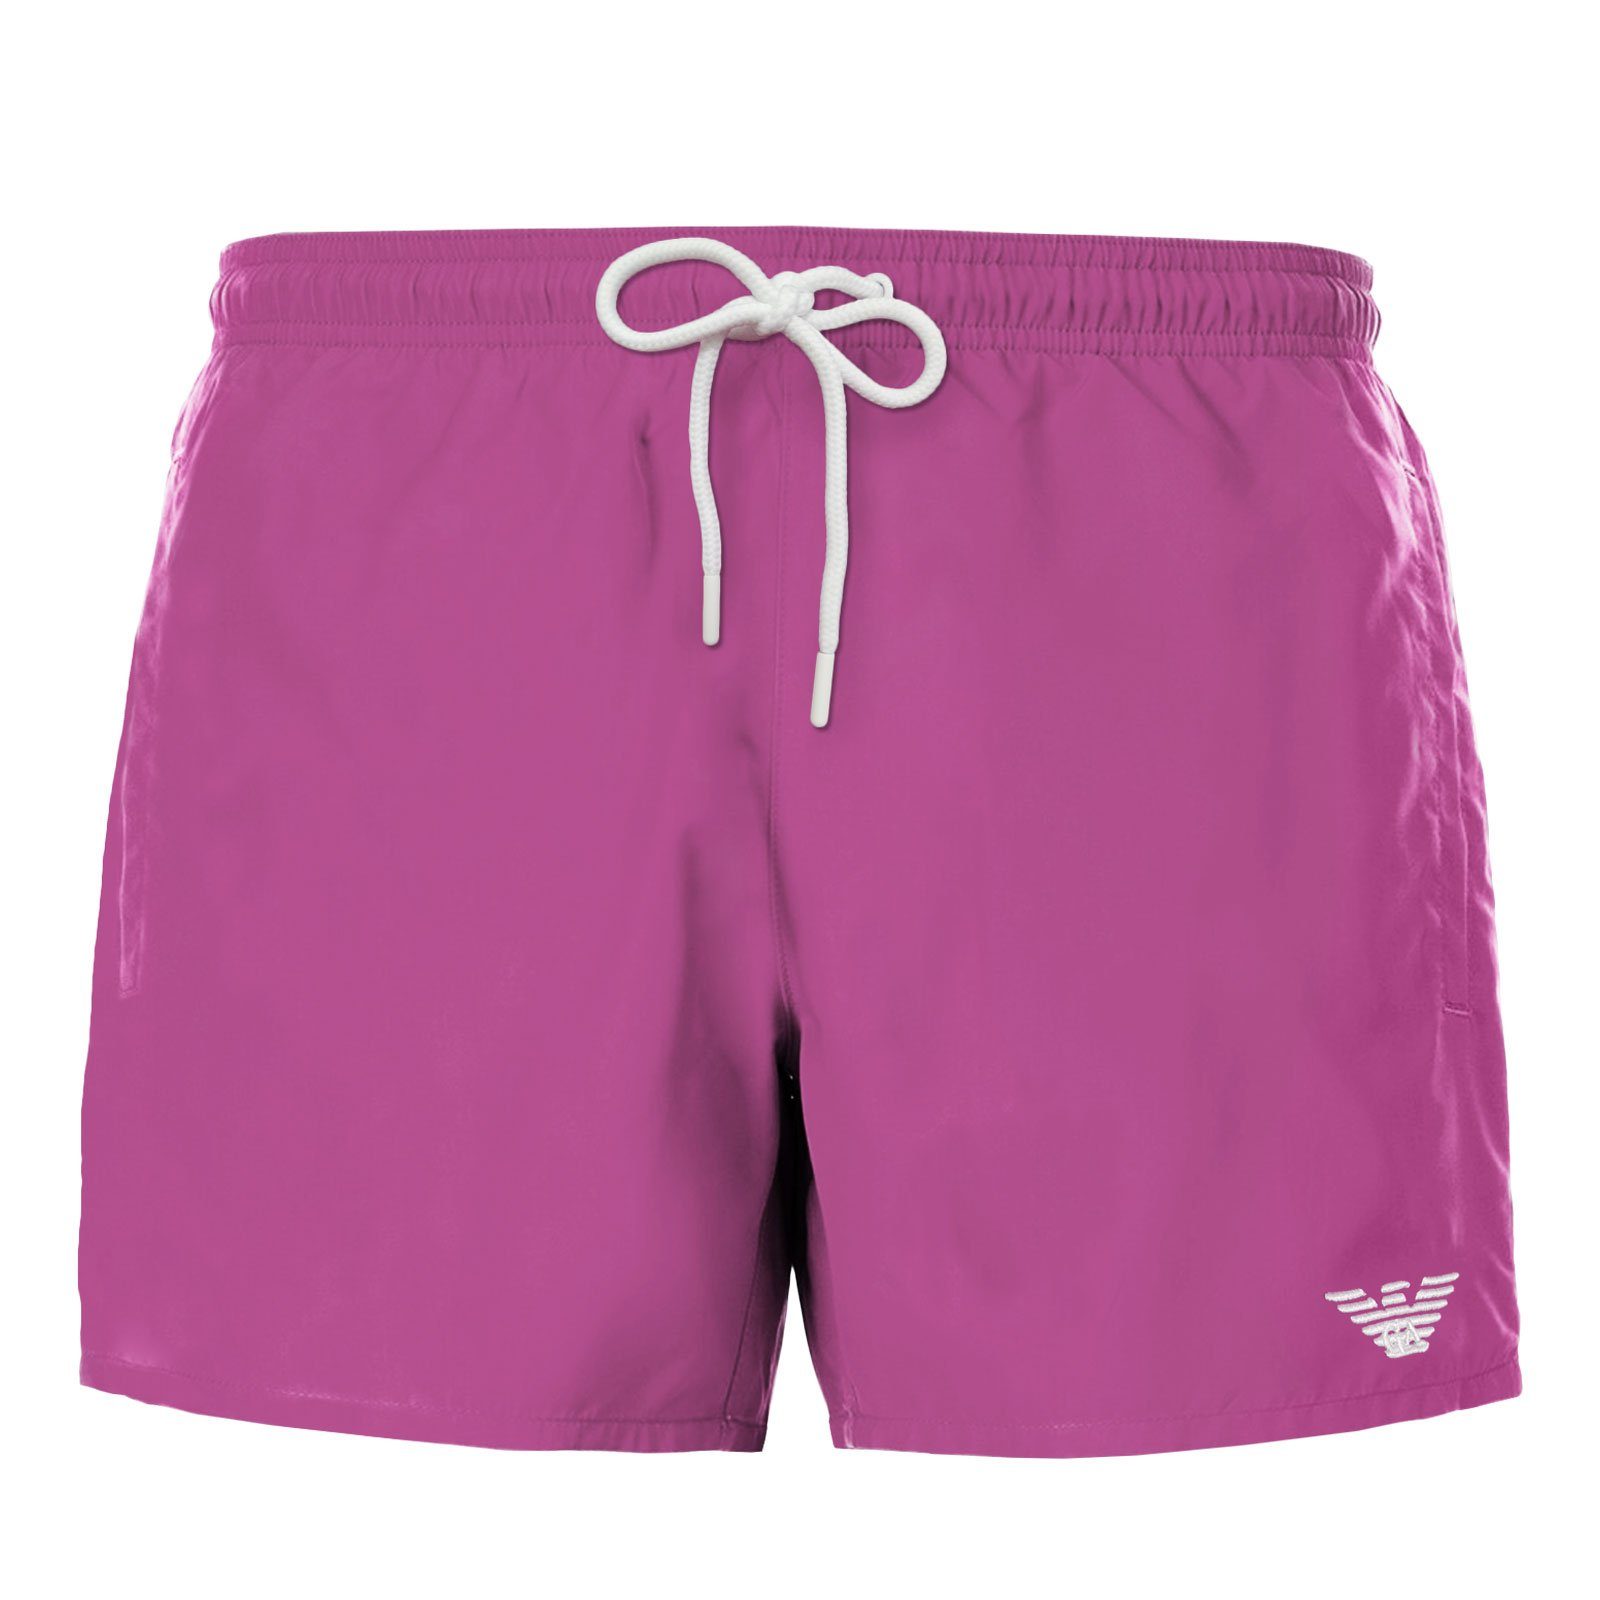 Emporio Armani Boxer-Badehose Mid Boxer Beachwear mit kleinen Markenlogo am linken Bein 05873 azalea